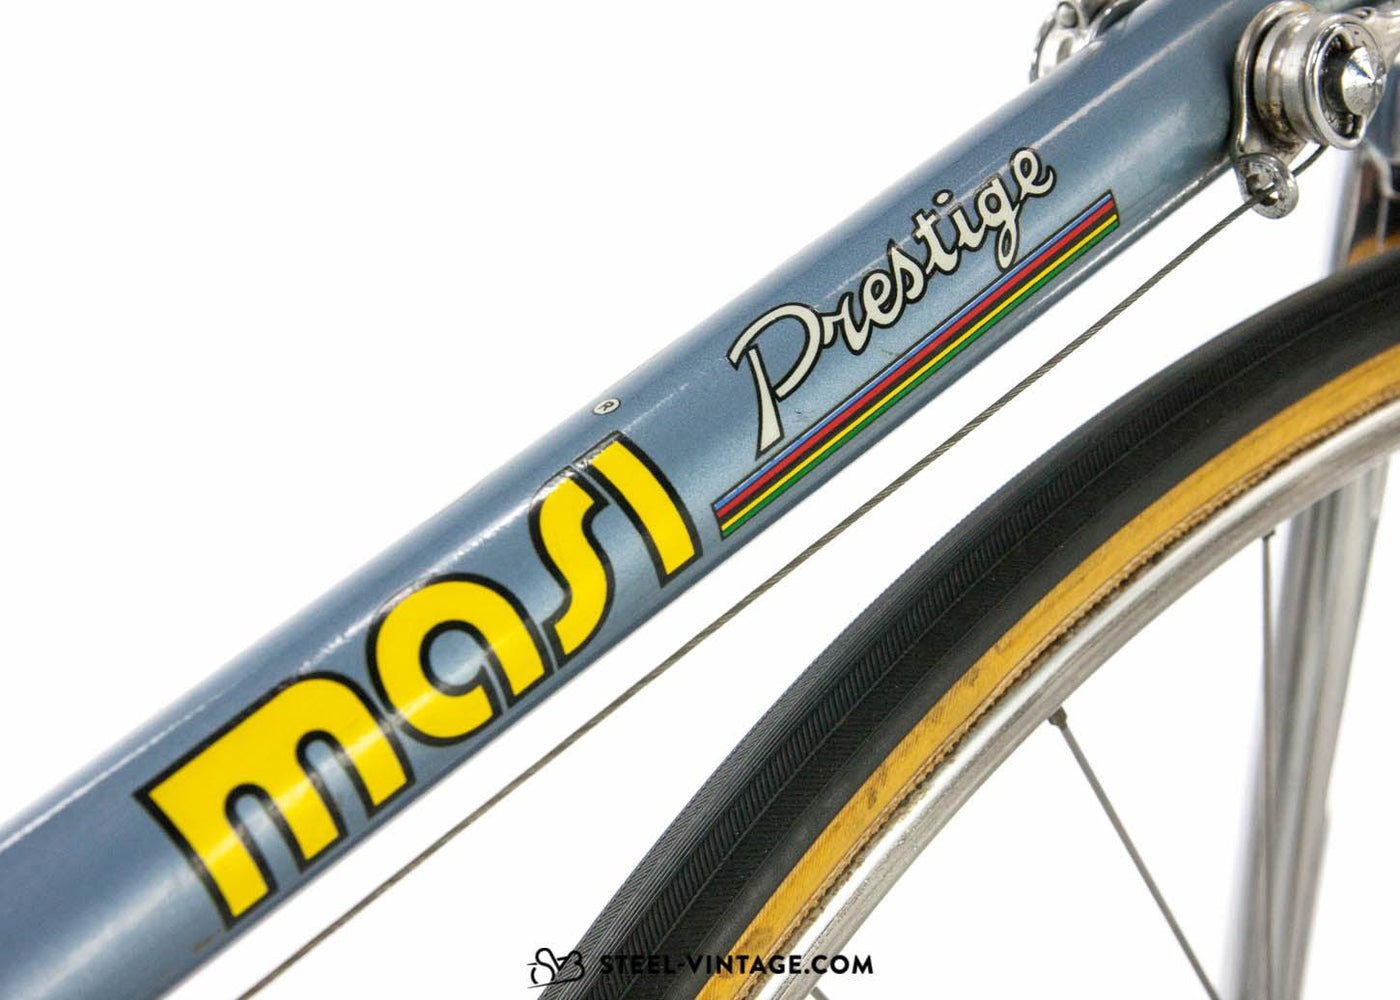 Masi Prestige Classic Road Bike 1975 - Steel Vintage Bikes